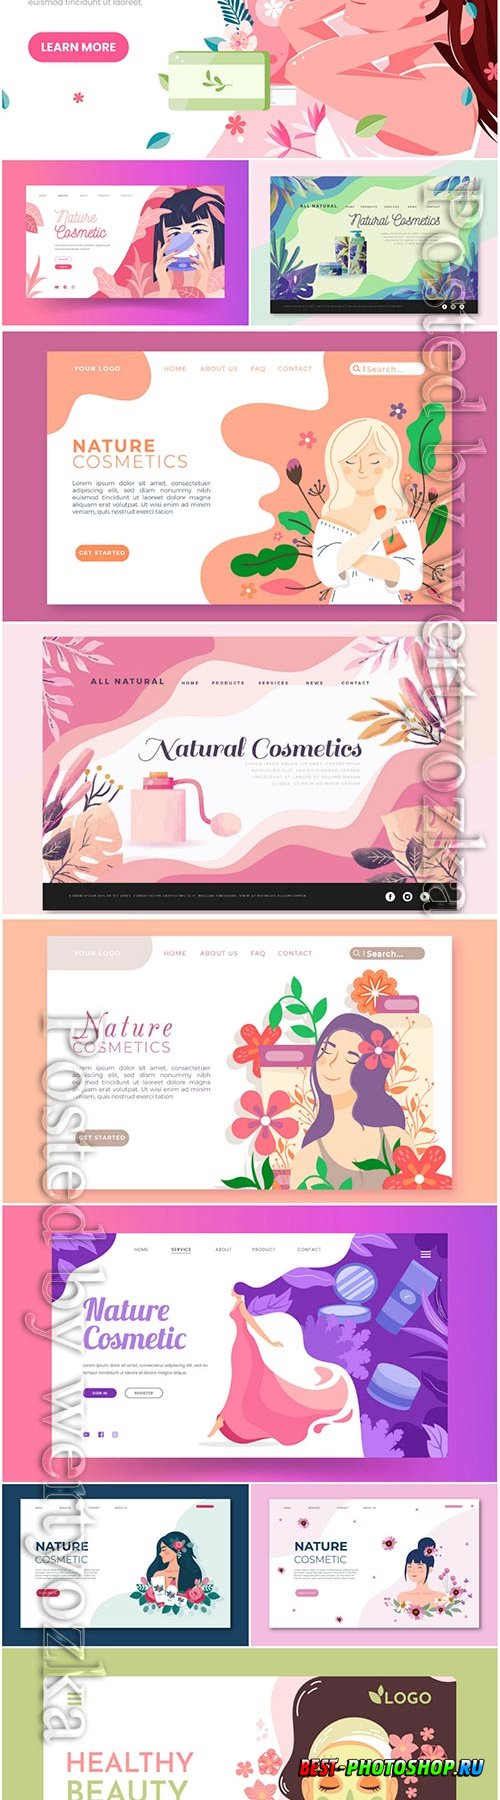 Nature cosmetics landing page